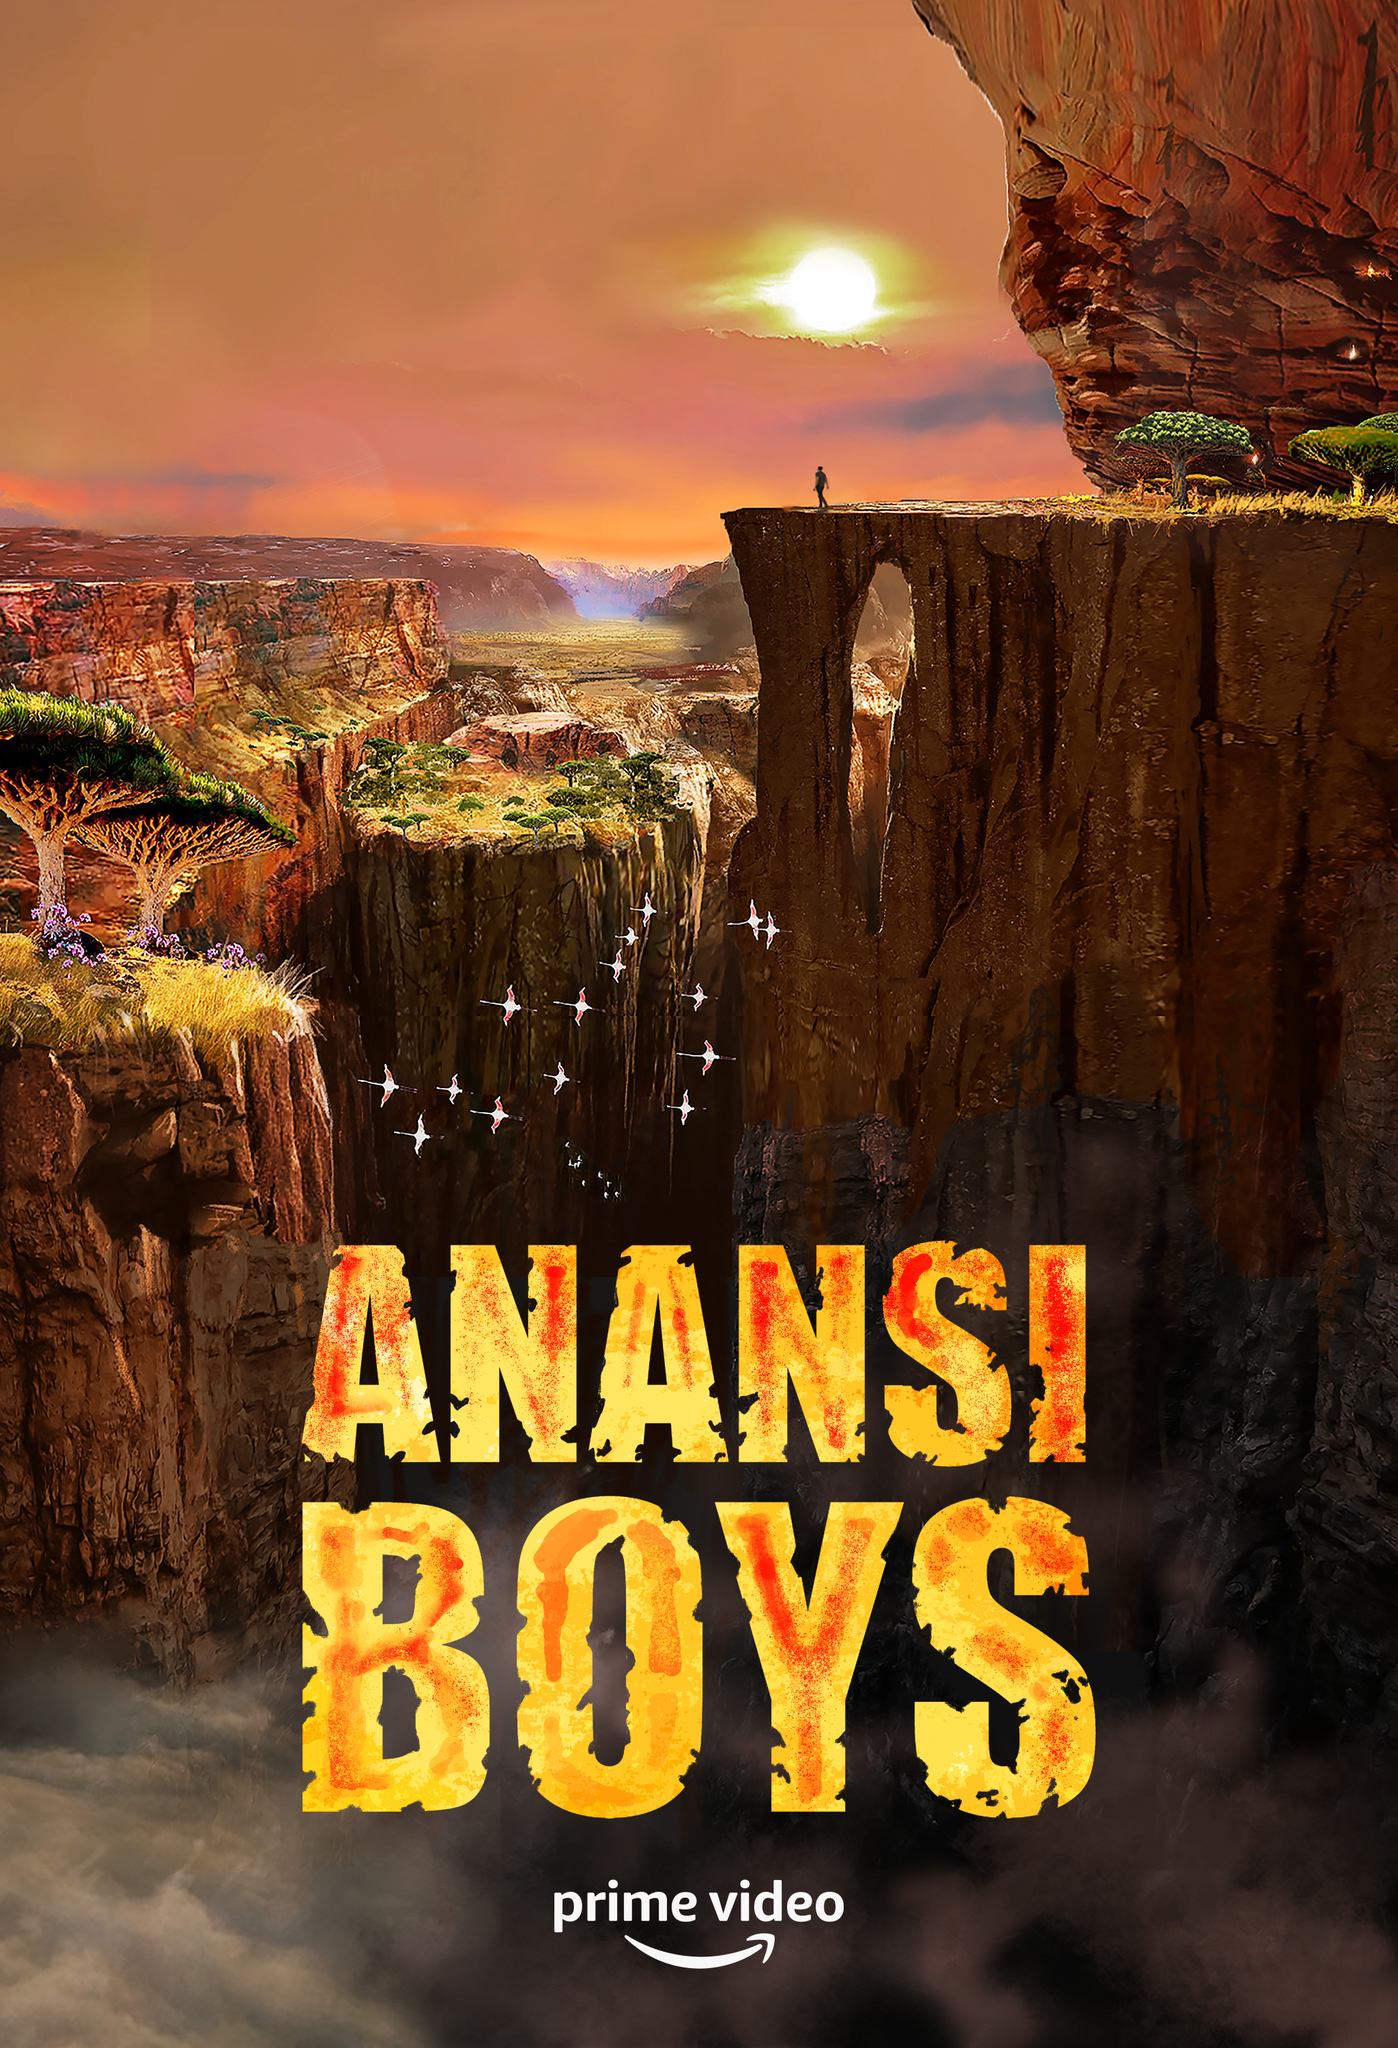 Neil Gaiman’s Anansi Boys In Development At Amazon Studios